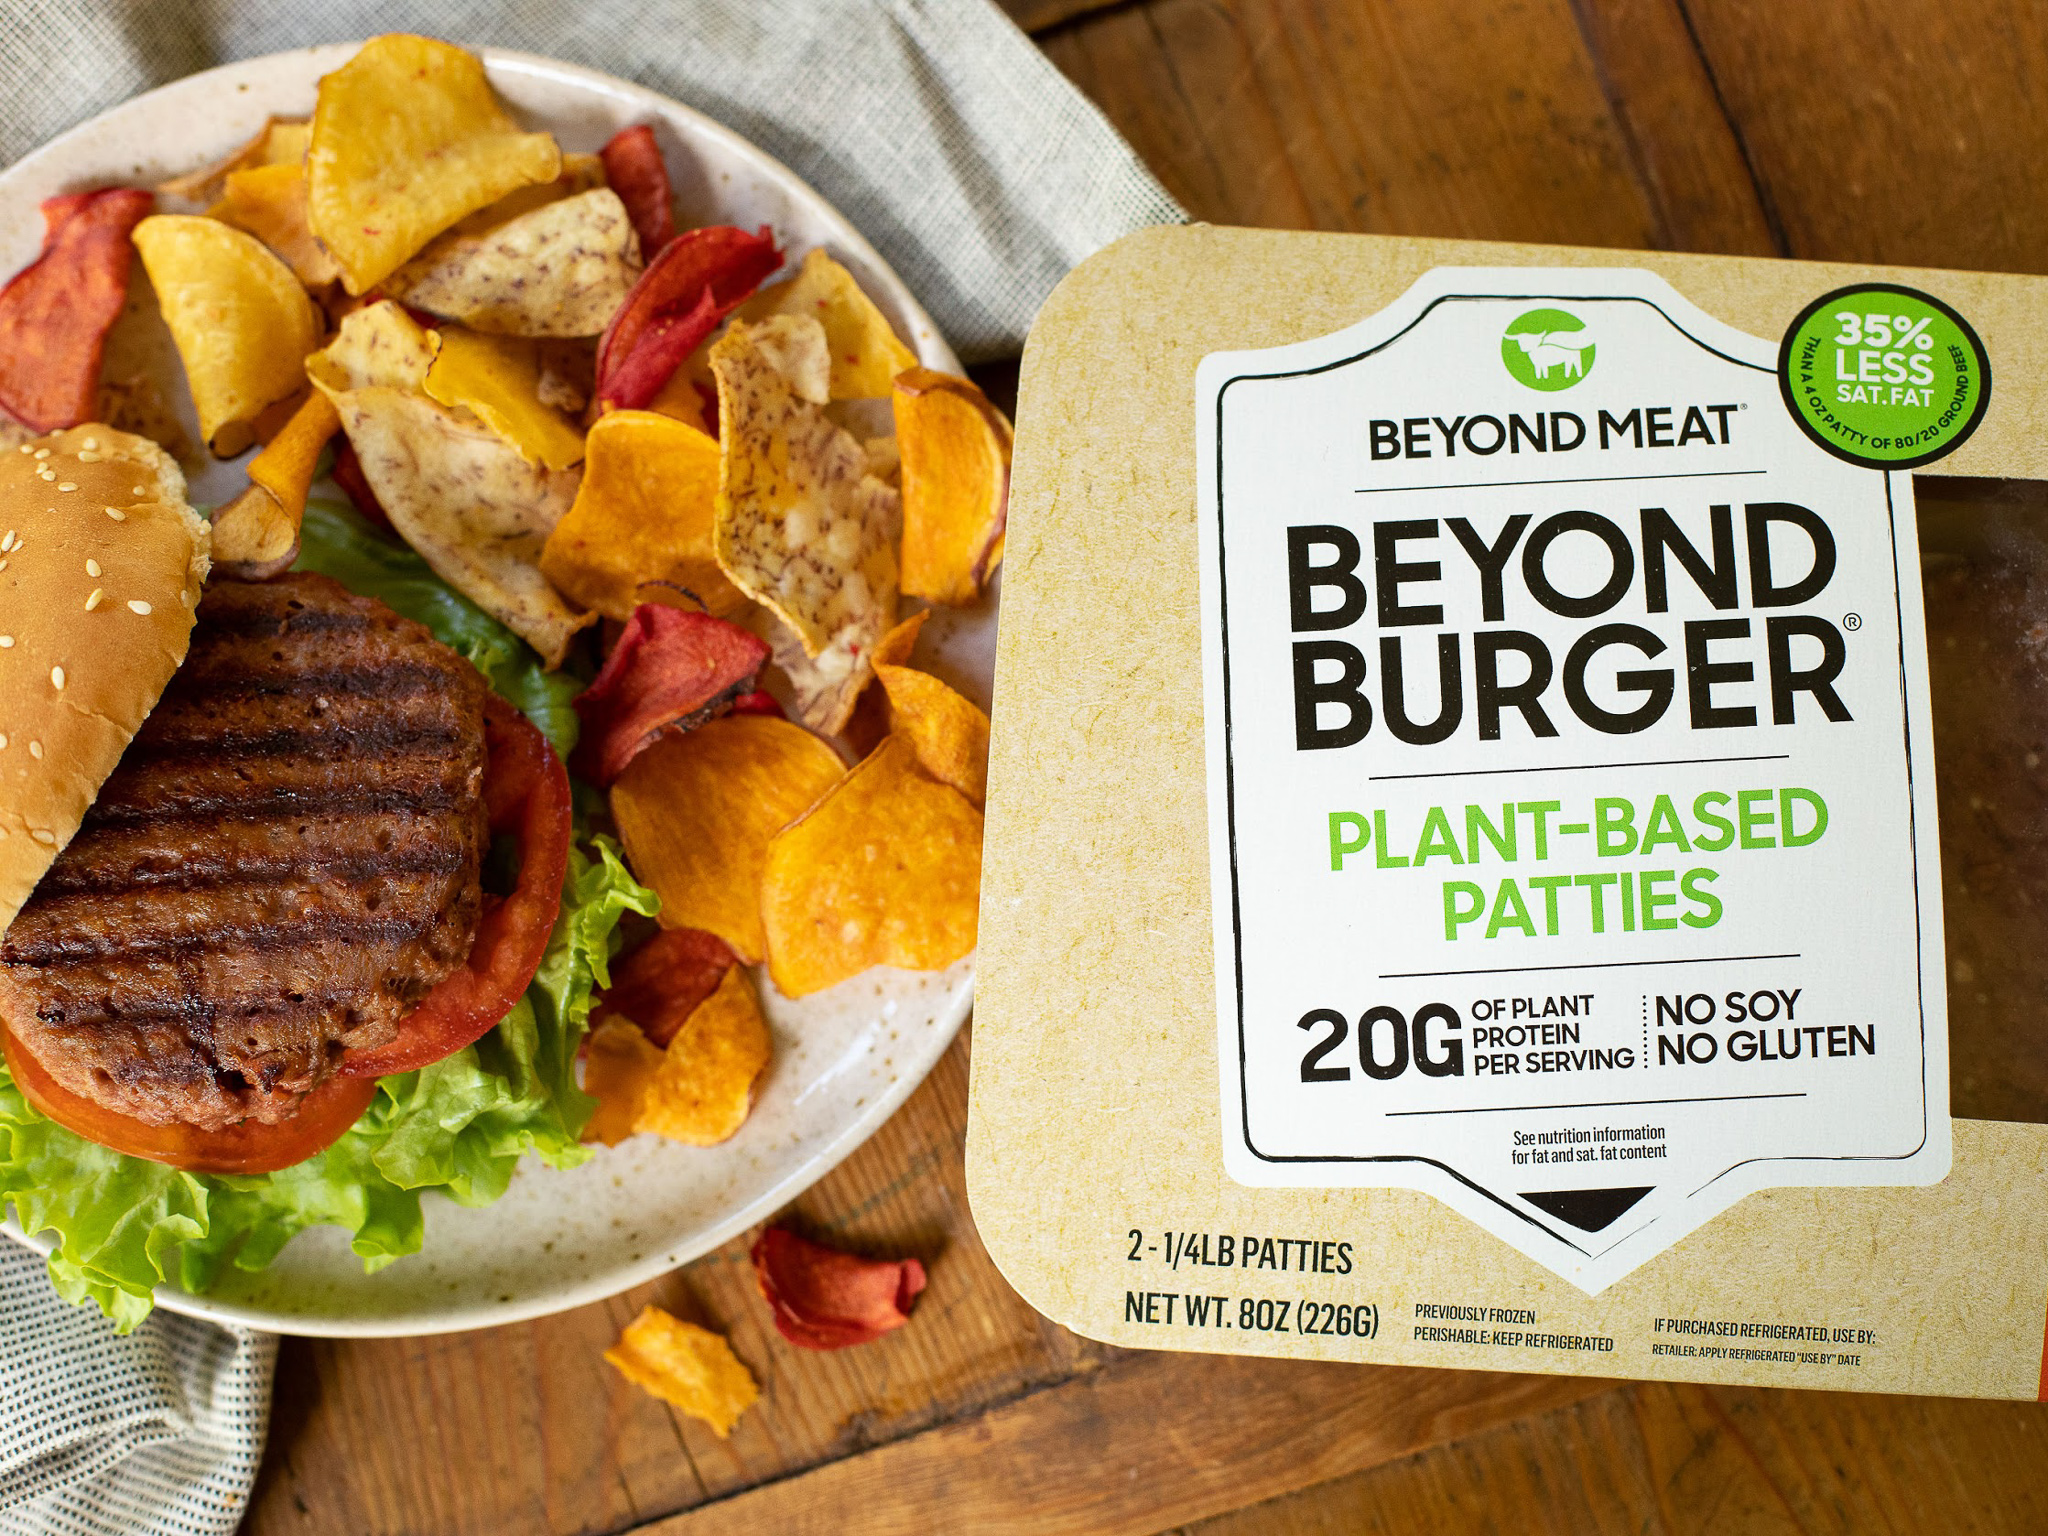 Fantastic Deals On Beyond Meatless Items At Kroger – Beyond Burgers Just $2.97